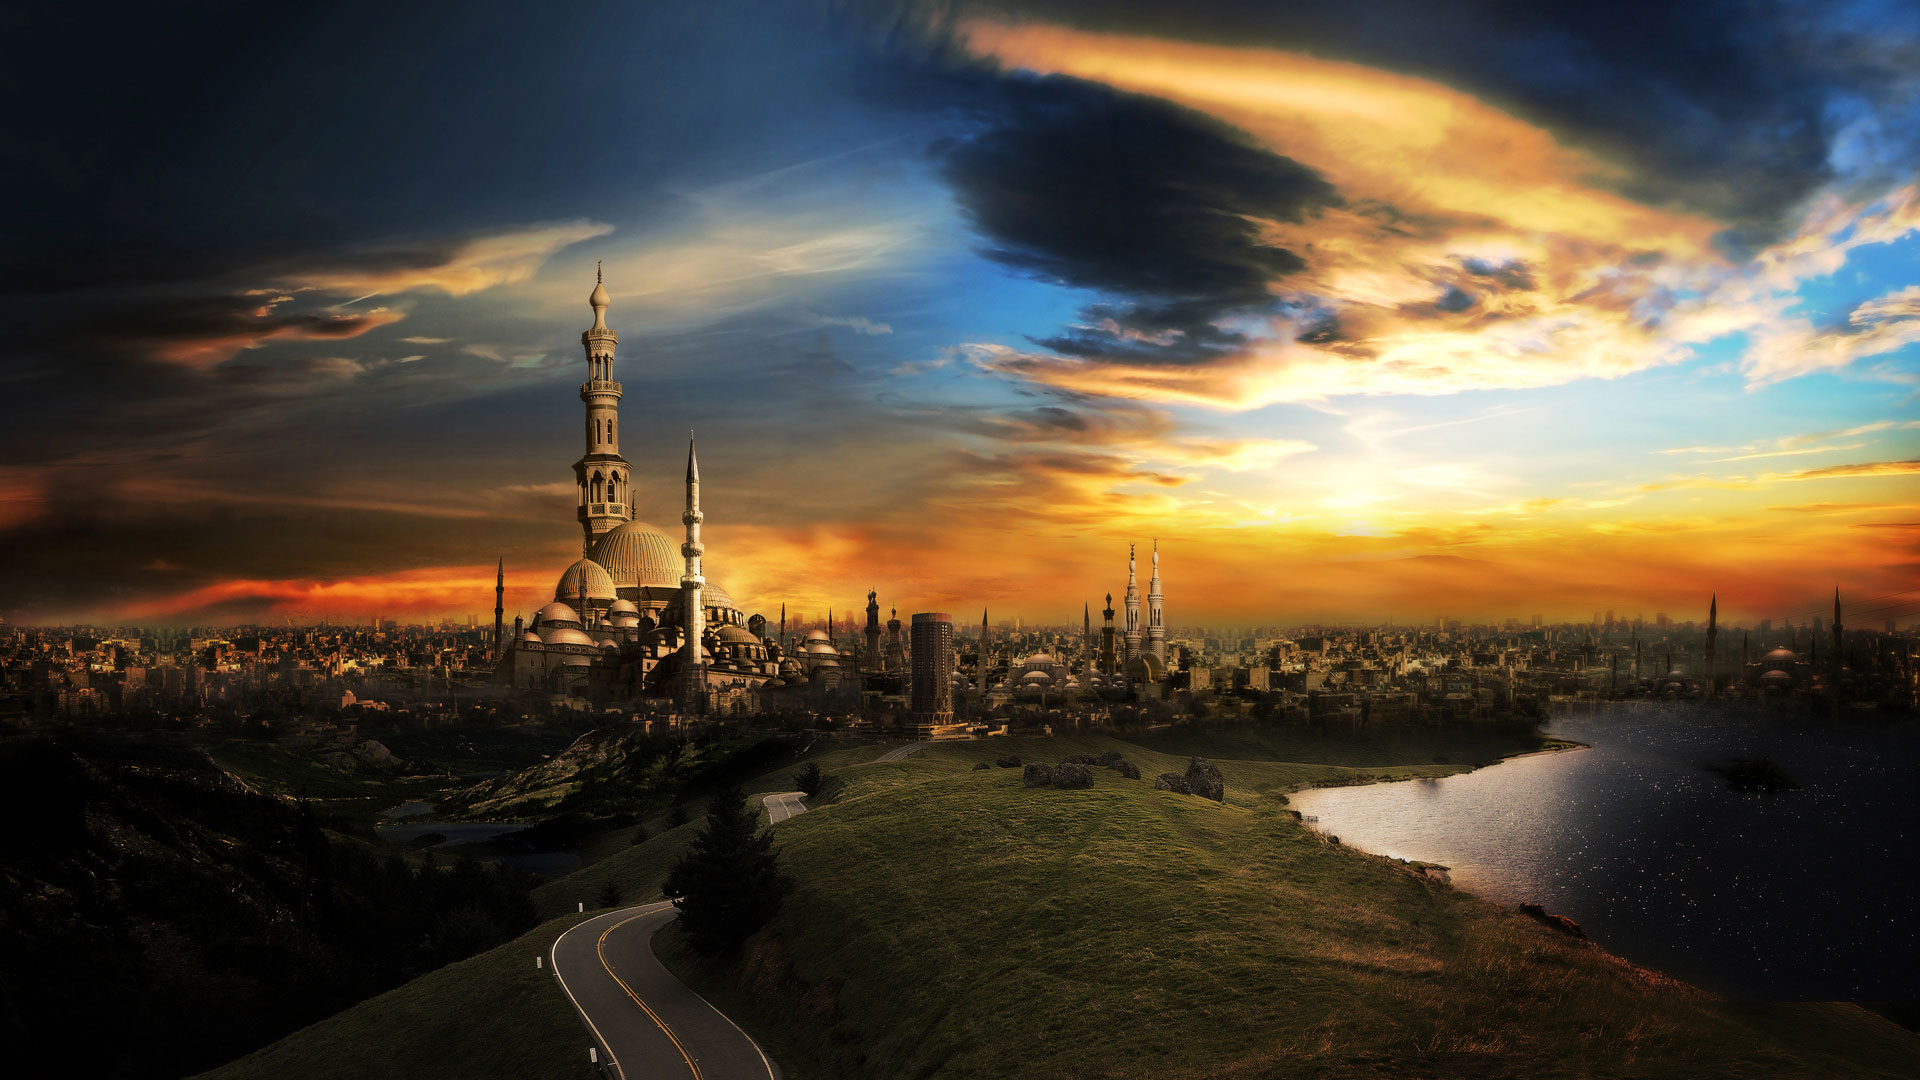 islam, road, landscape, lake, cgi, city, man made, cairo, sky, cloud, sunset iphone wallpaper